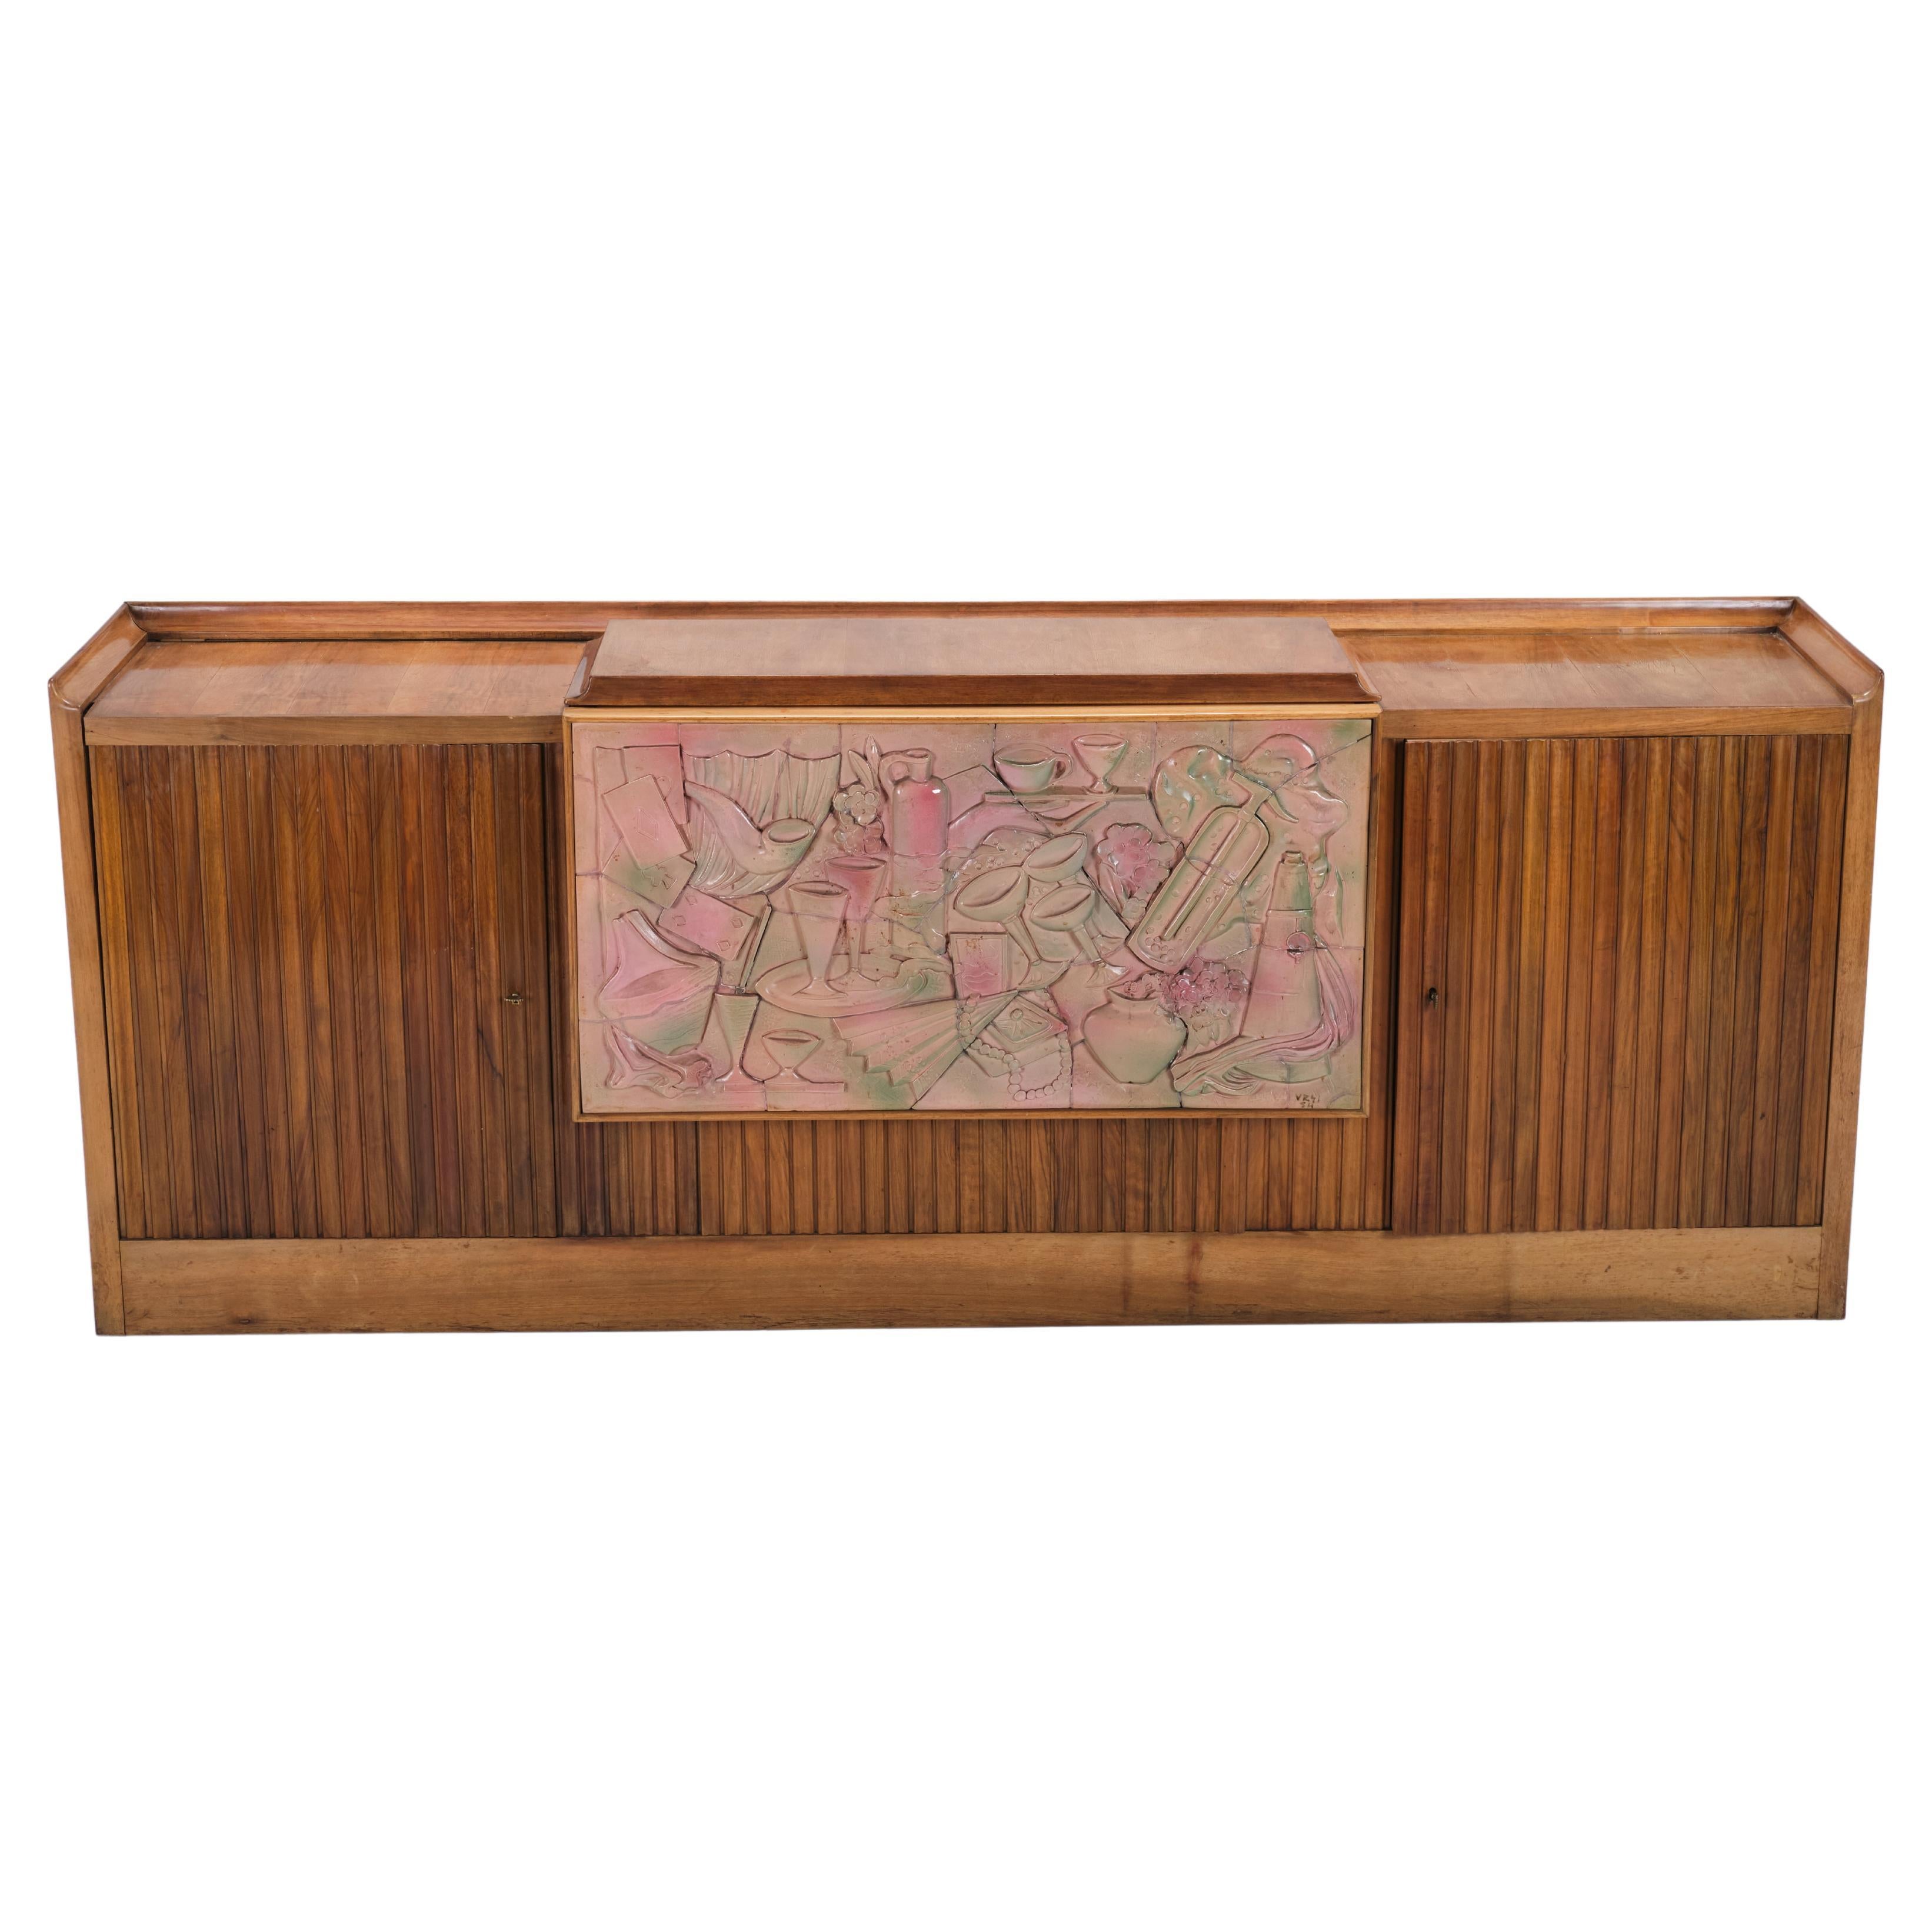 Giuseppe Anzani Midcentury bar cabinet with stunning glazed ceramic panel - 1950 For Sale